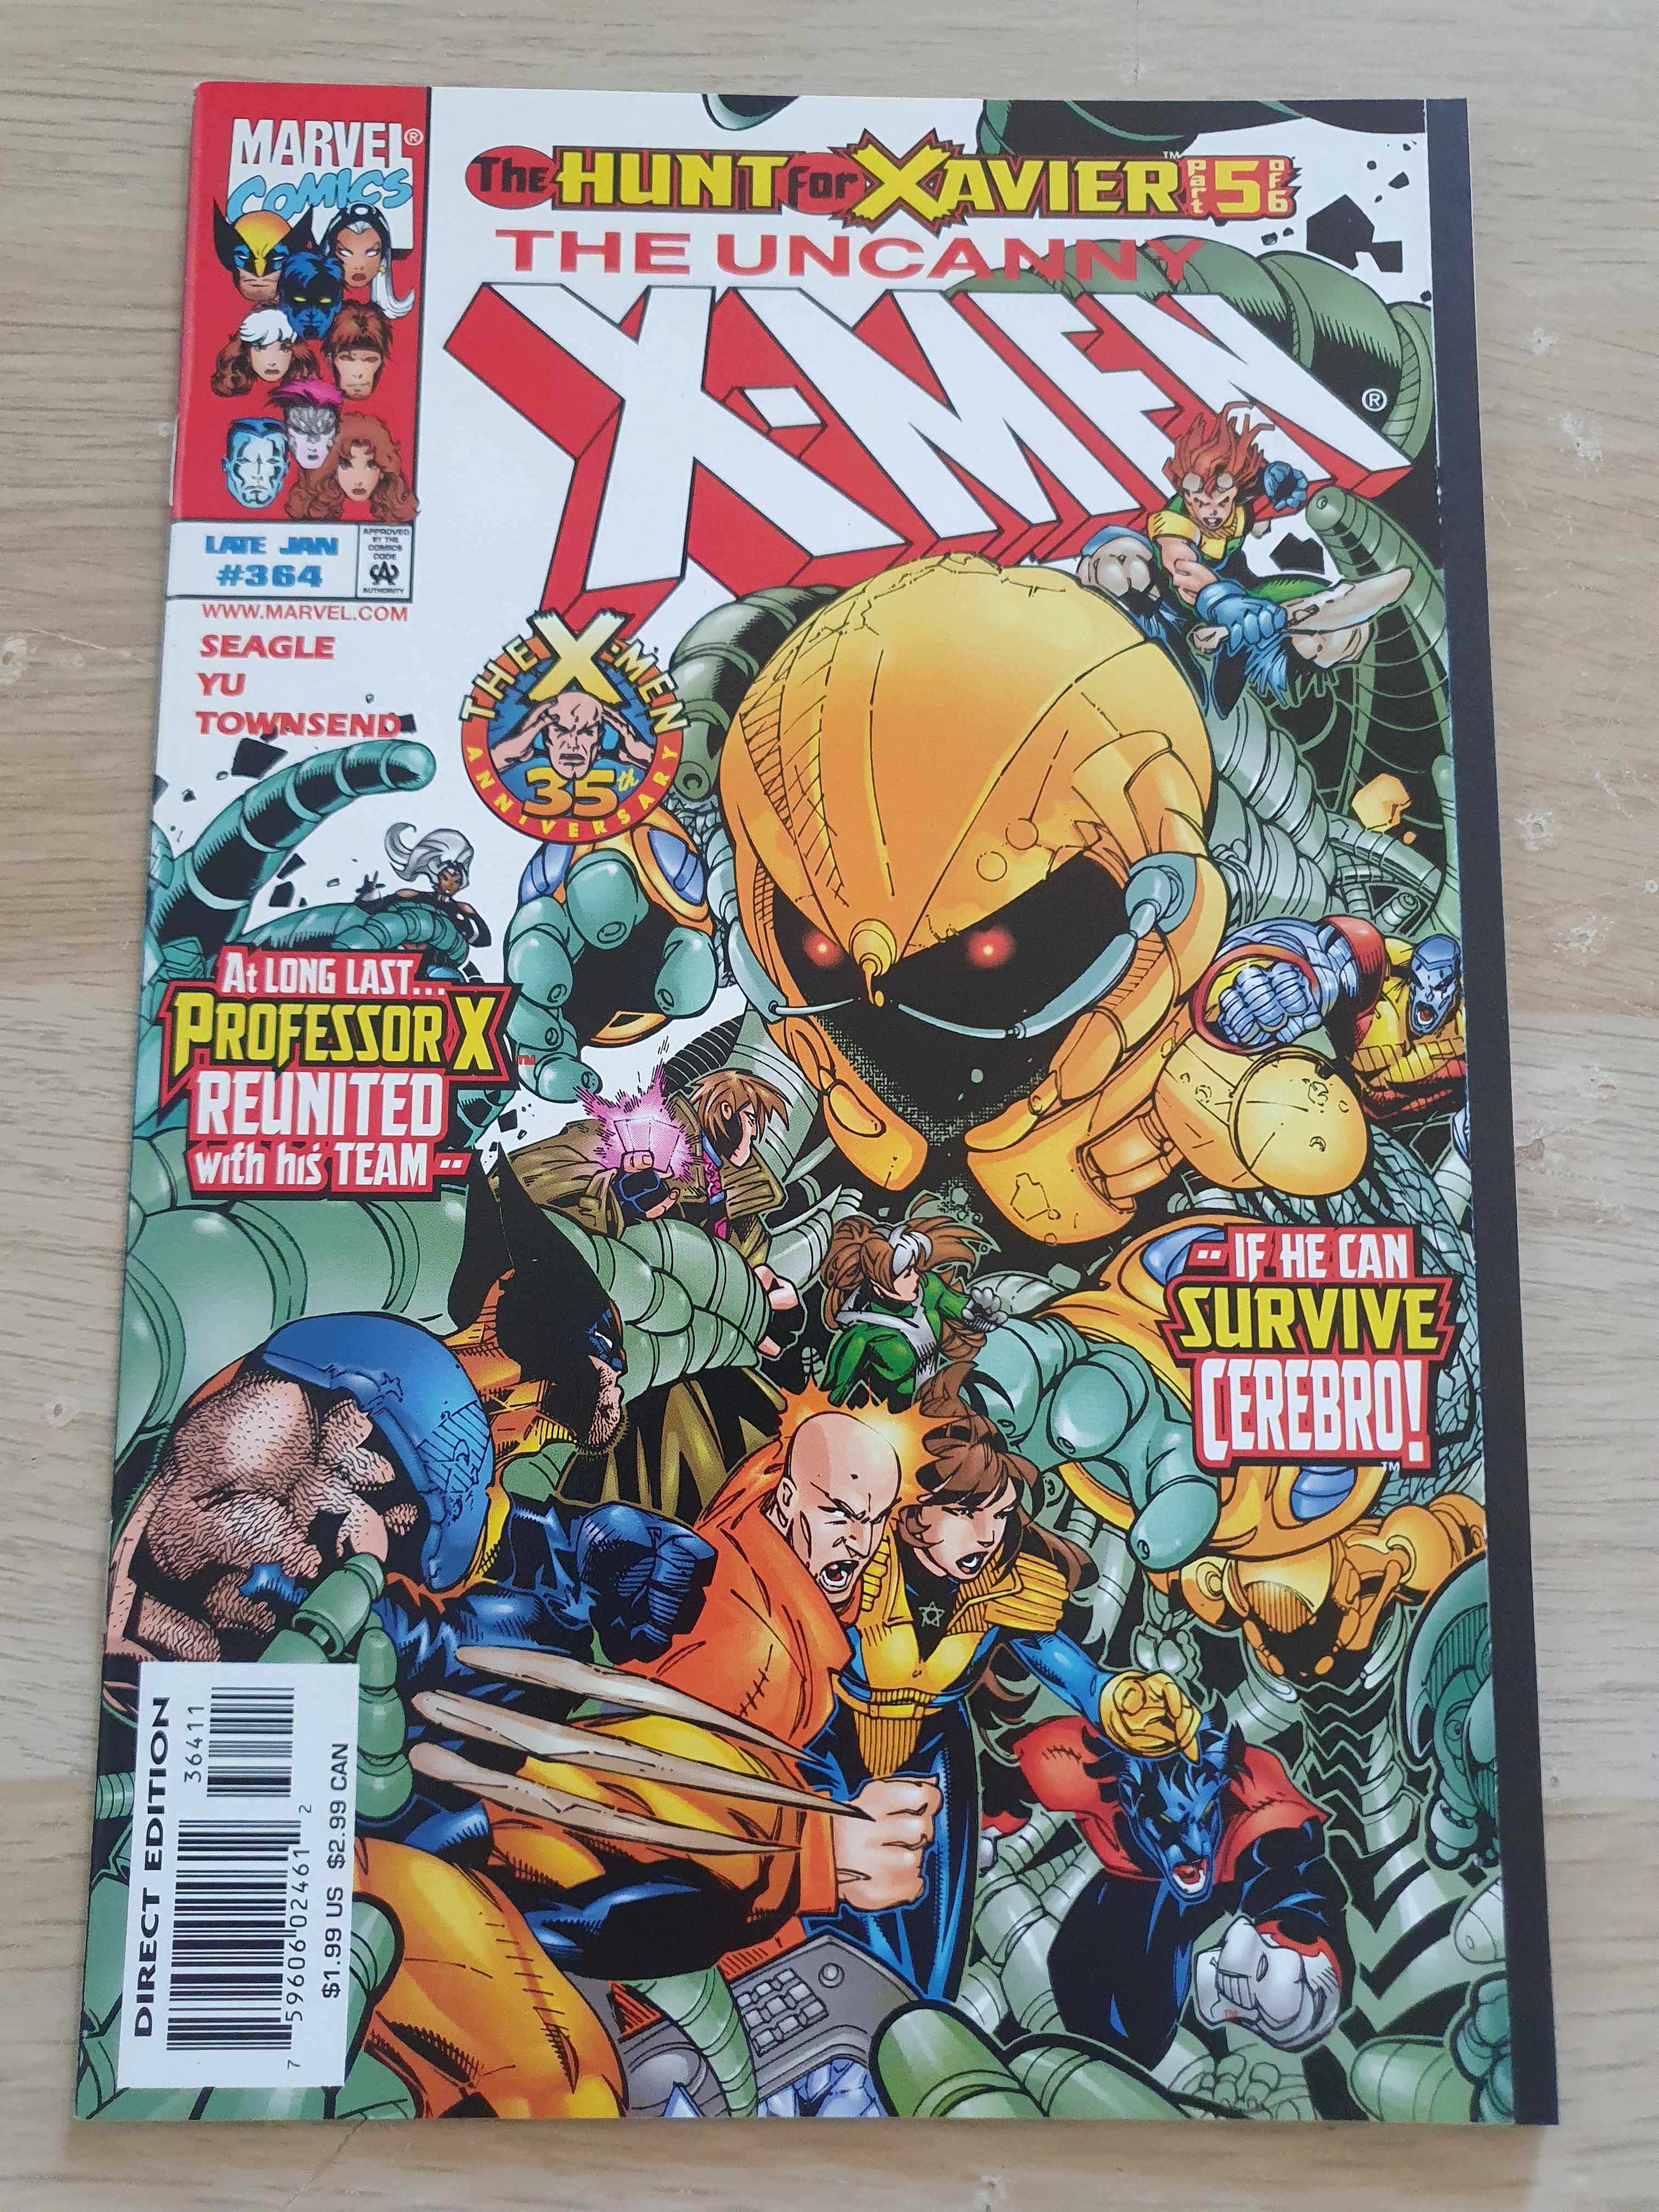 Hunt for Xavier The uncanny X-men vol 1: 362-364; X-men: 82-84 (ZM125)